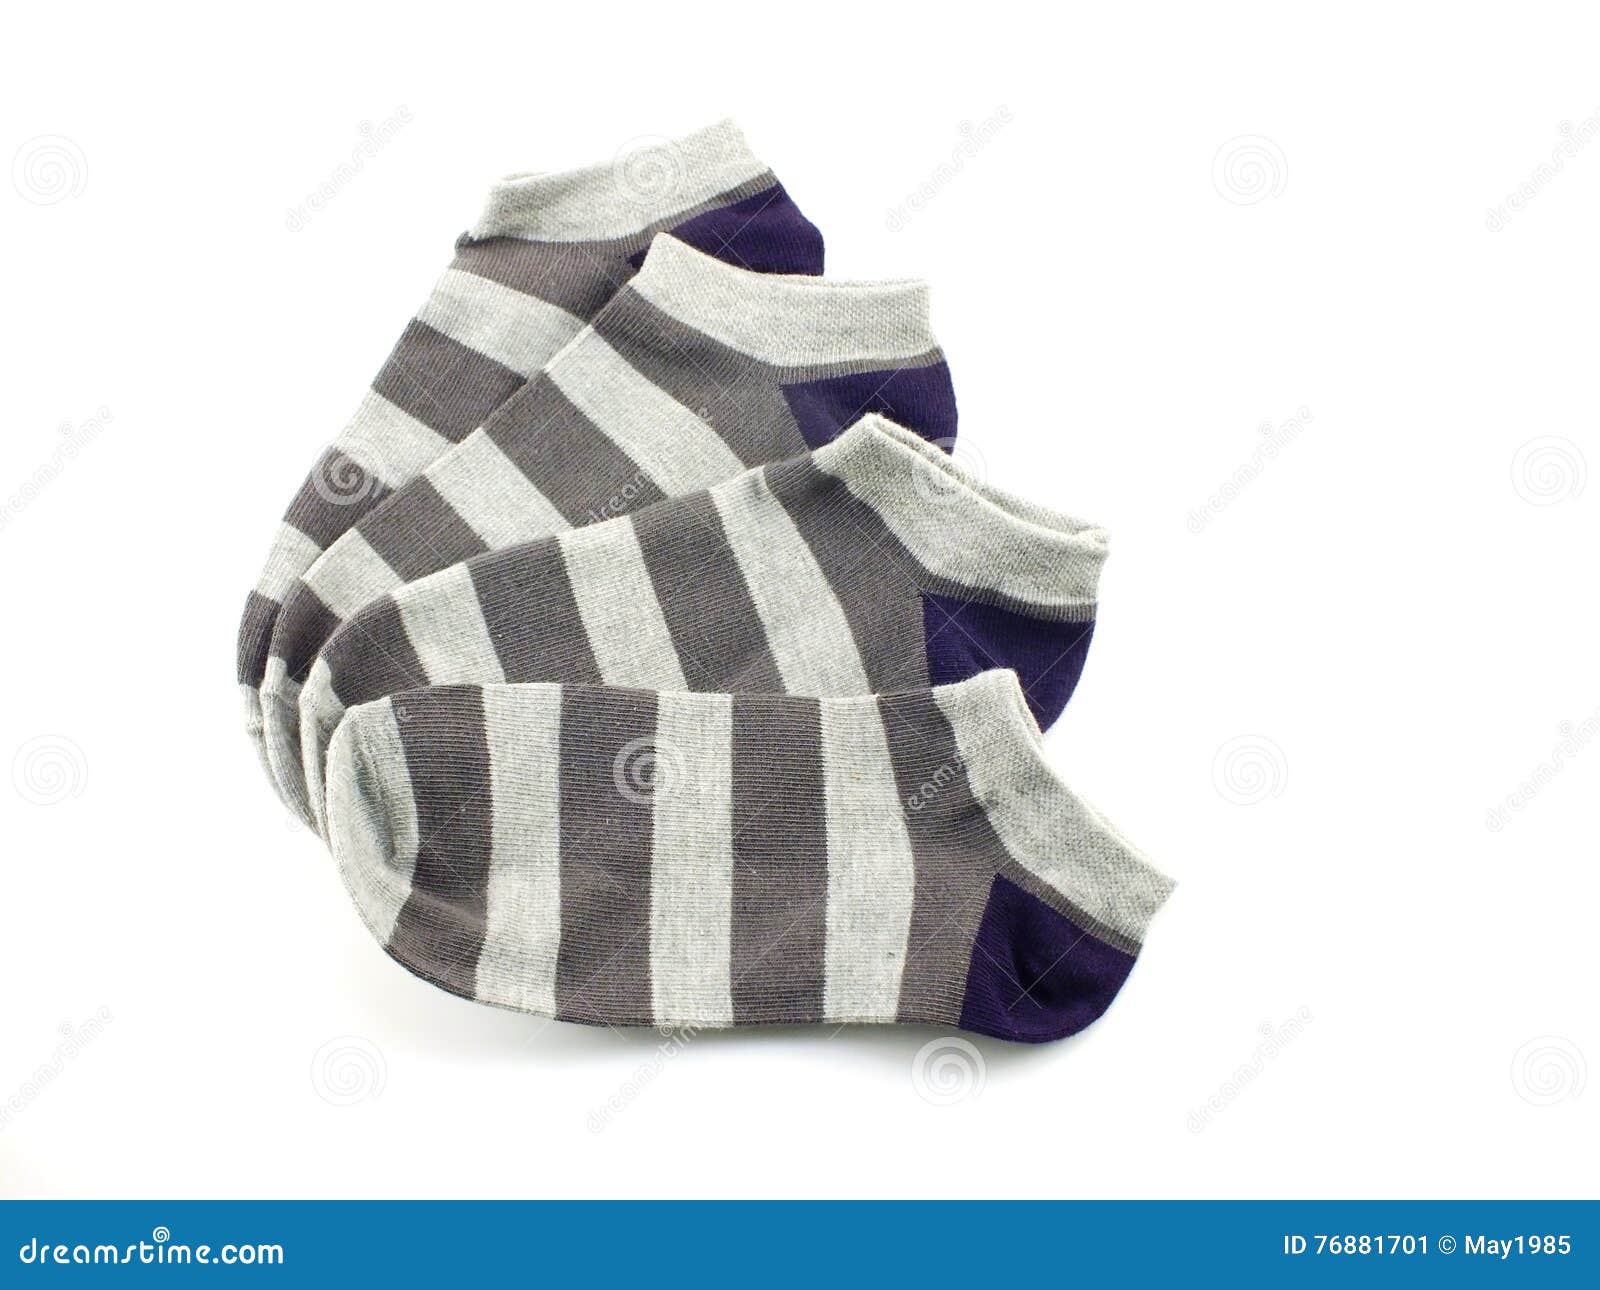 Colorful of Socks Isolate on White Background Stock Image - Image of ...